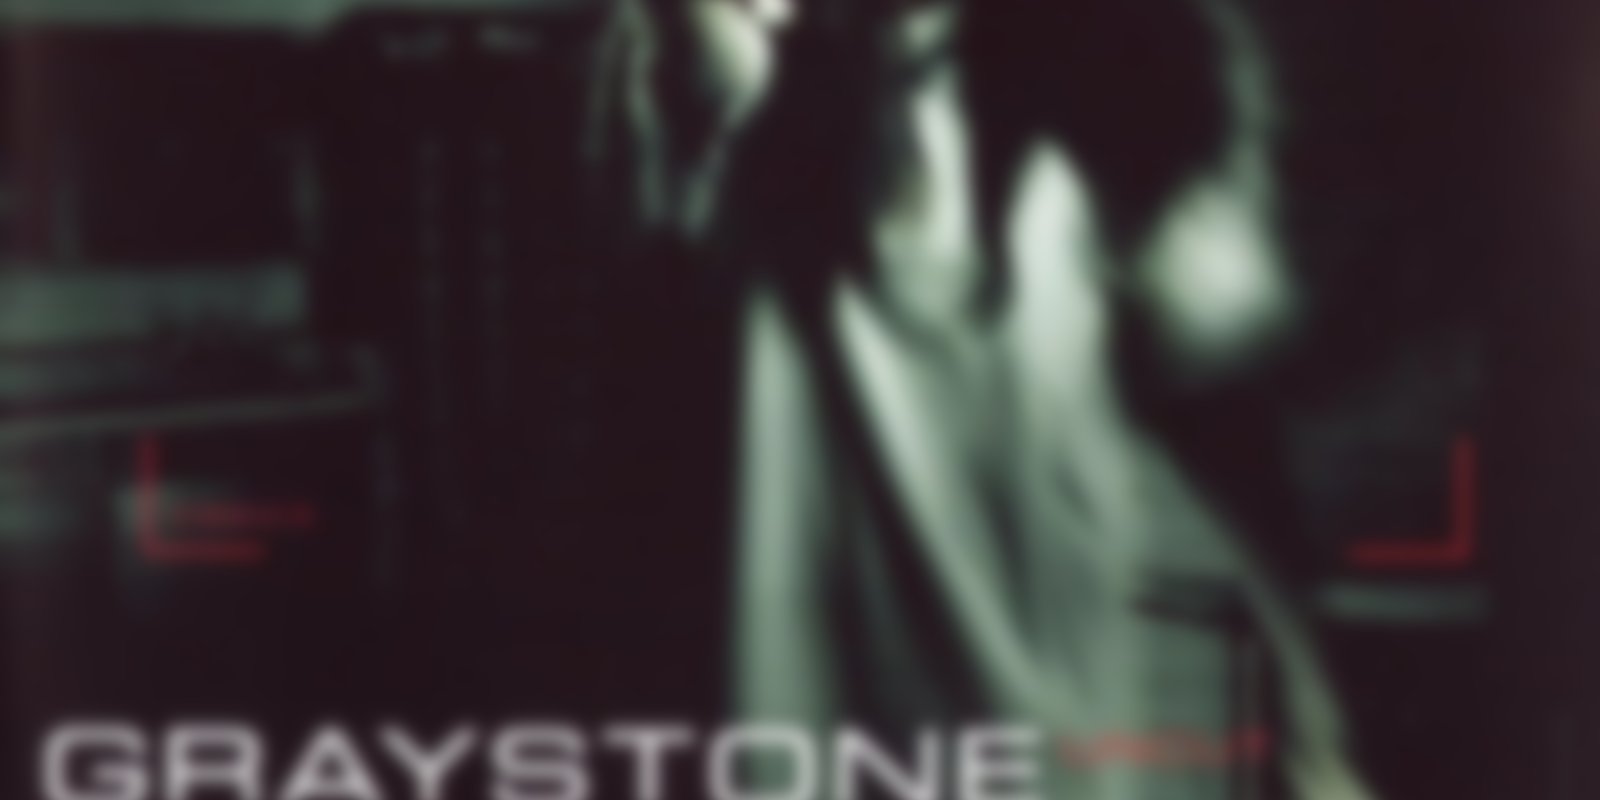 Graystone